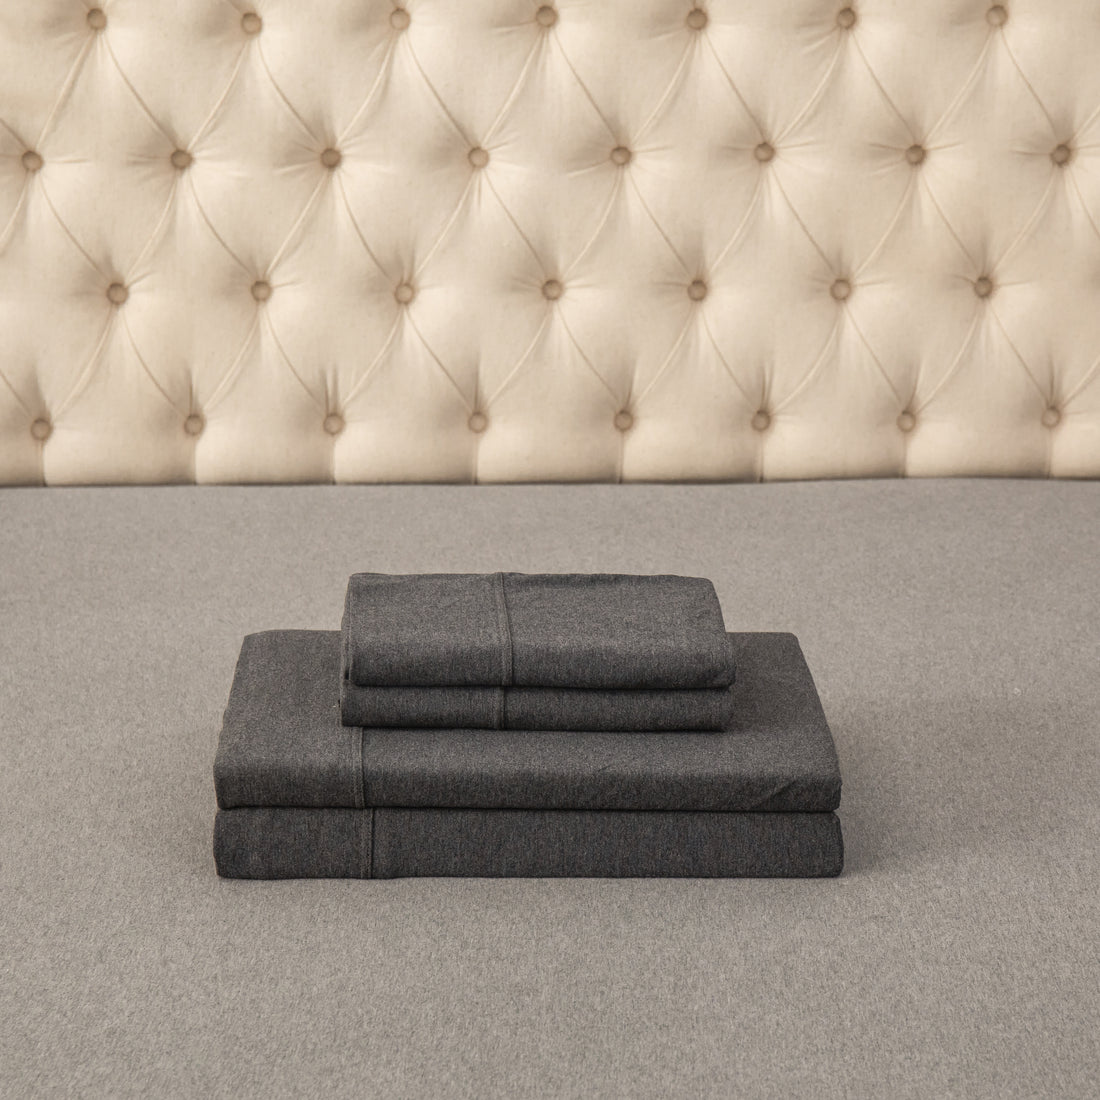 Pure Era - T-shirt Cotton Jersey Knit Bed Sheet Set - Charcoal Gray